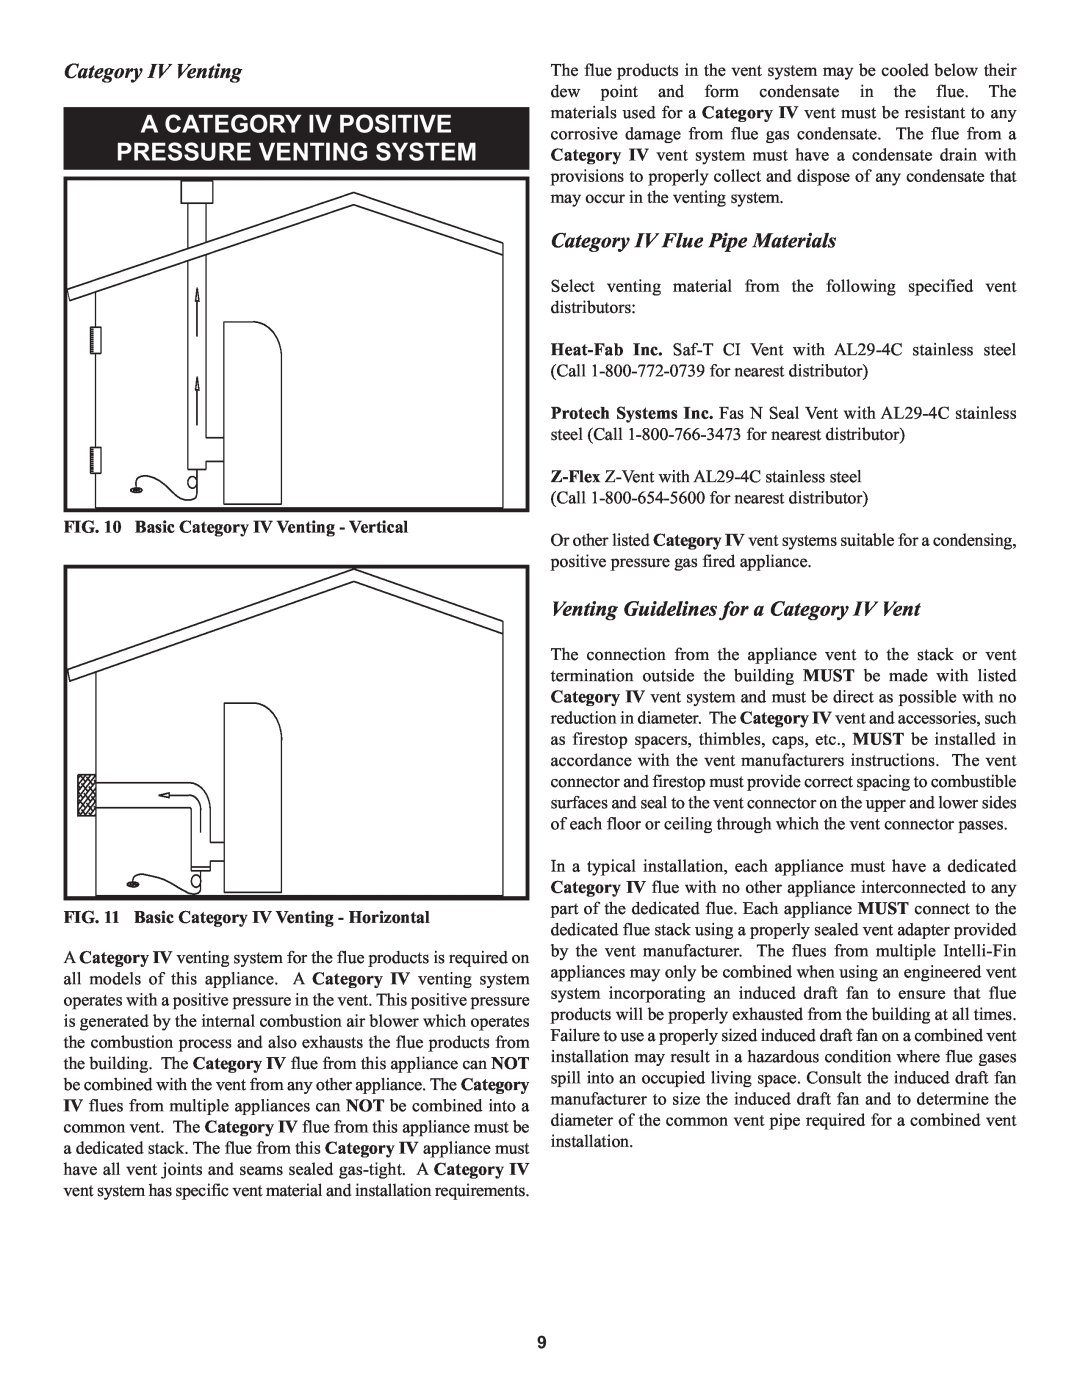 Lochinvar 1, 000 A Category Iv Positive Pressure Venting System, Category IV Venting, Category IV Flue Pipe Materials 